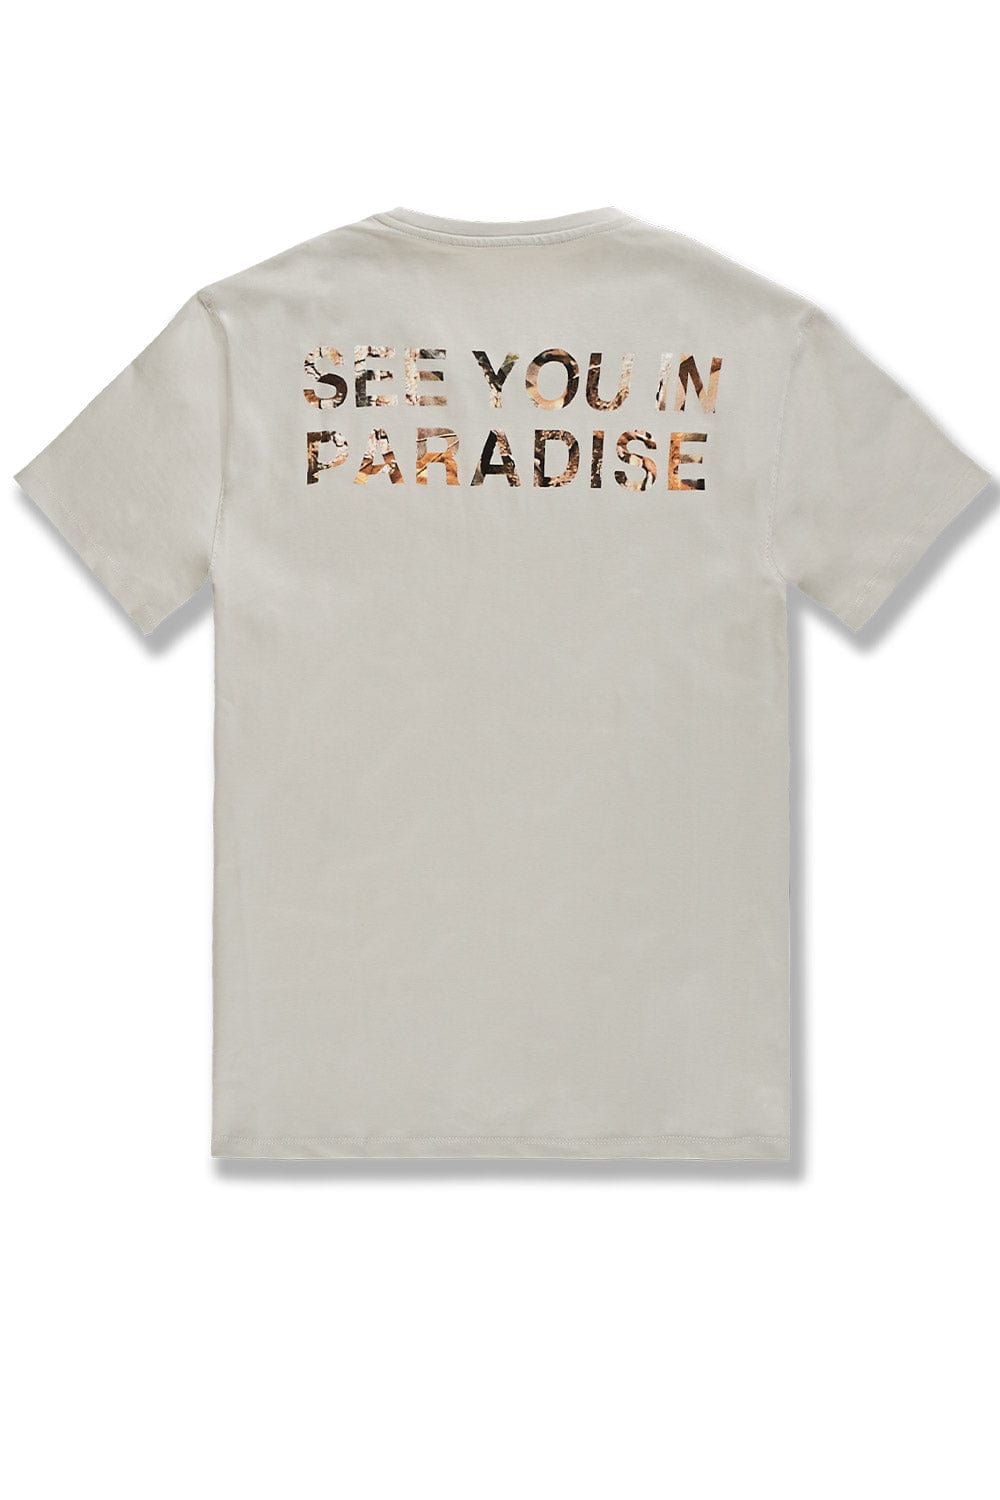 Jordan Craig See You In Paradise T-Shirt (Real Tree)